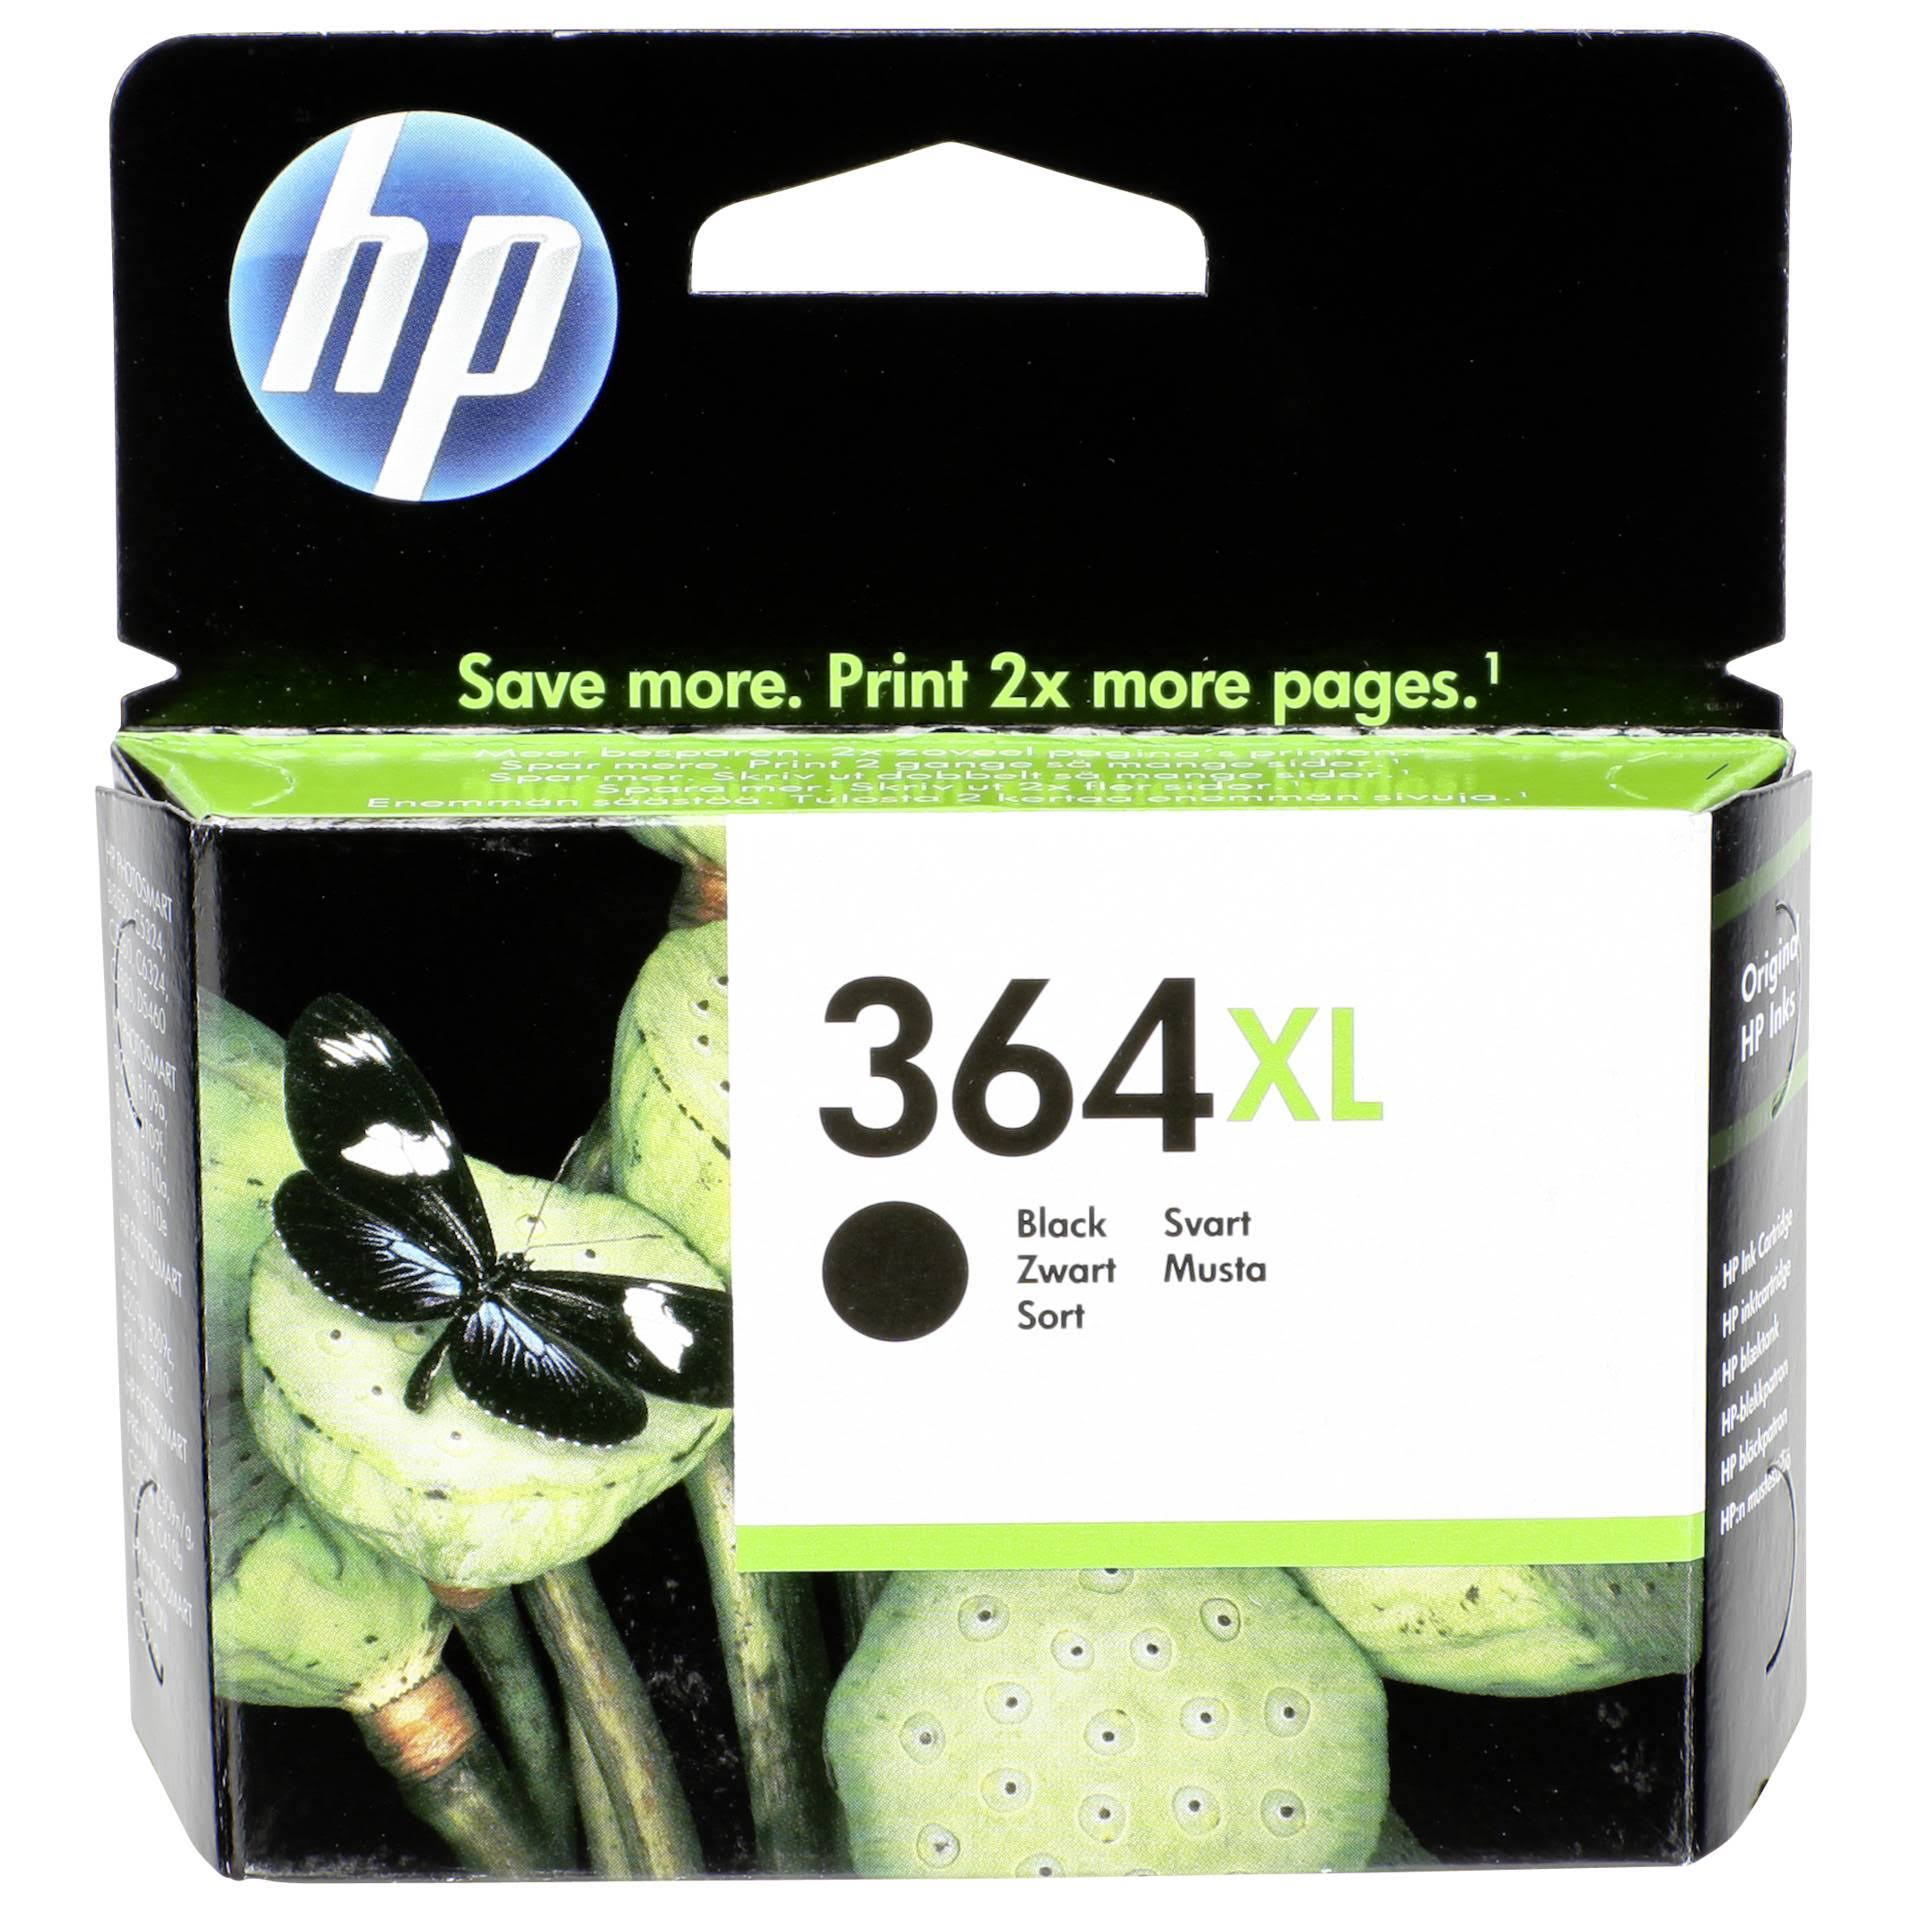 HP 364XL Printer Ink Cartridge - Black